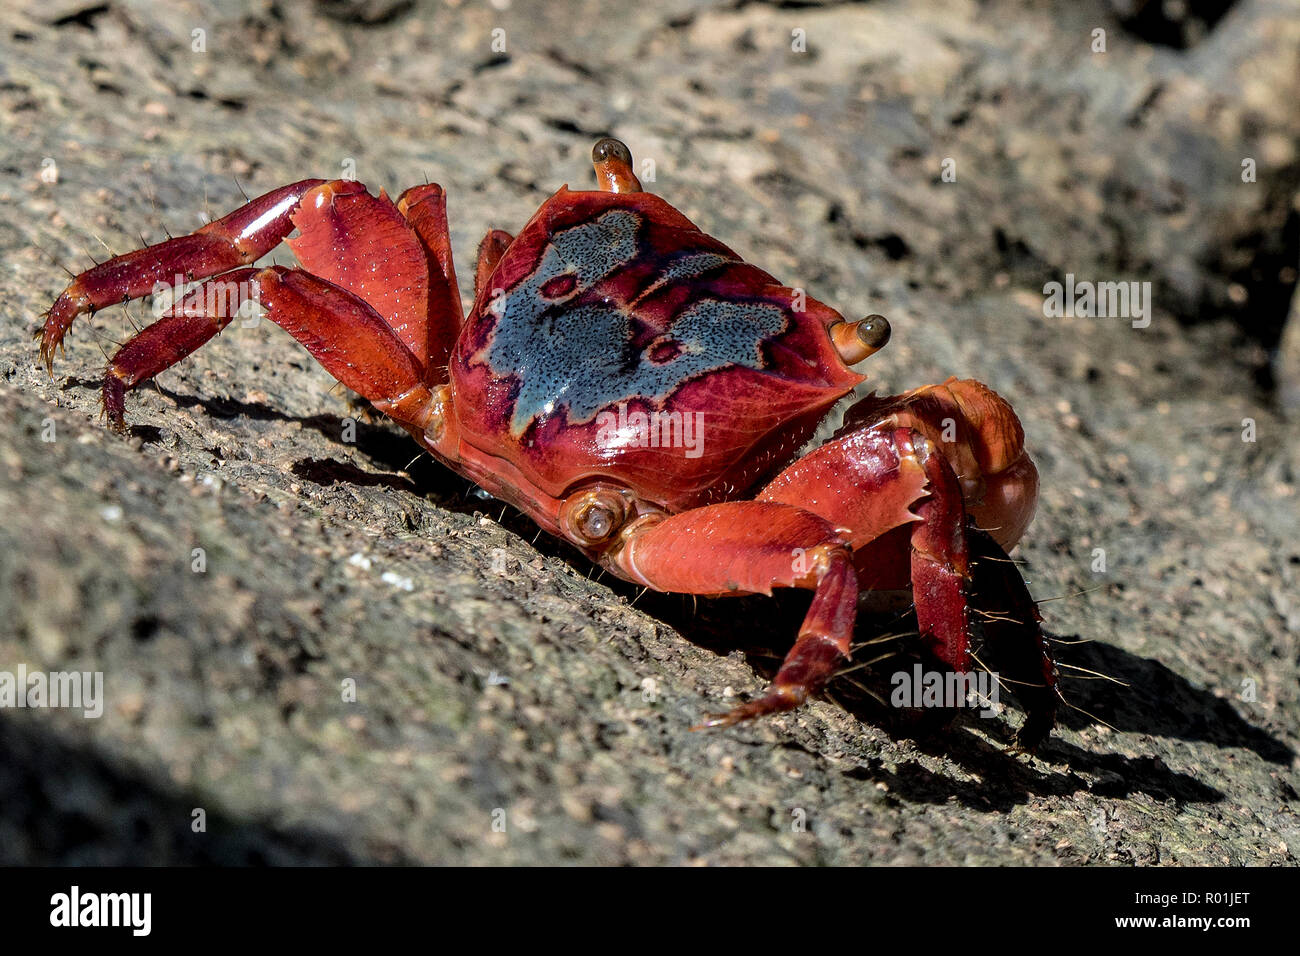 Mangrove crab found at Wynnum, brisbane Stock Photo